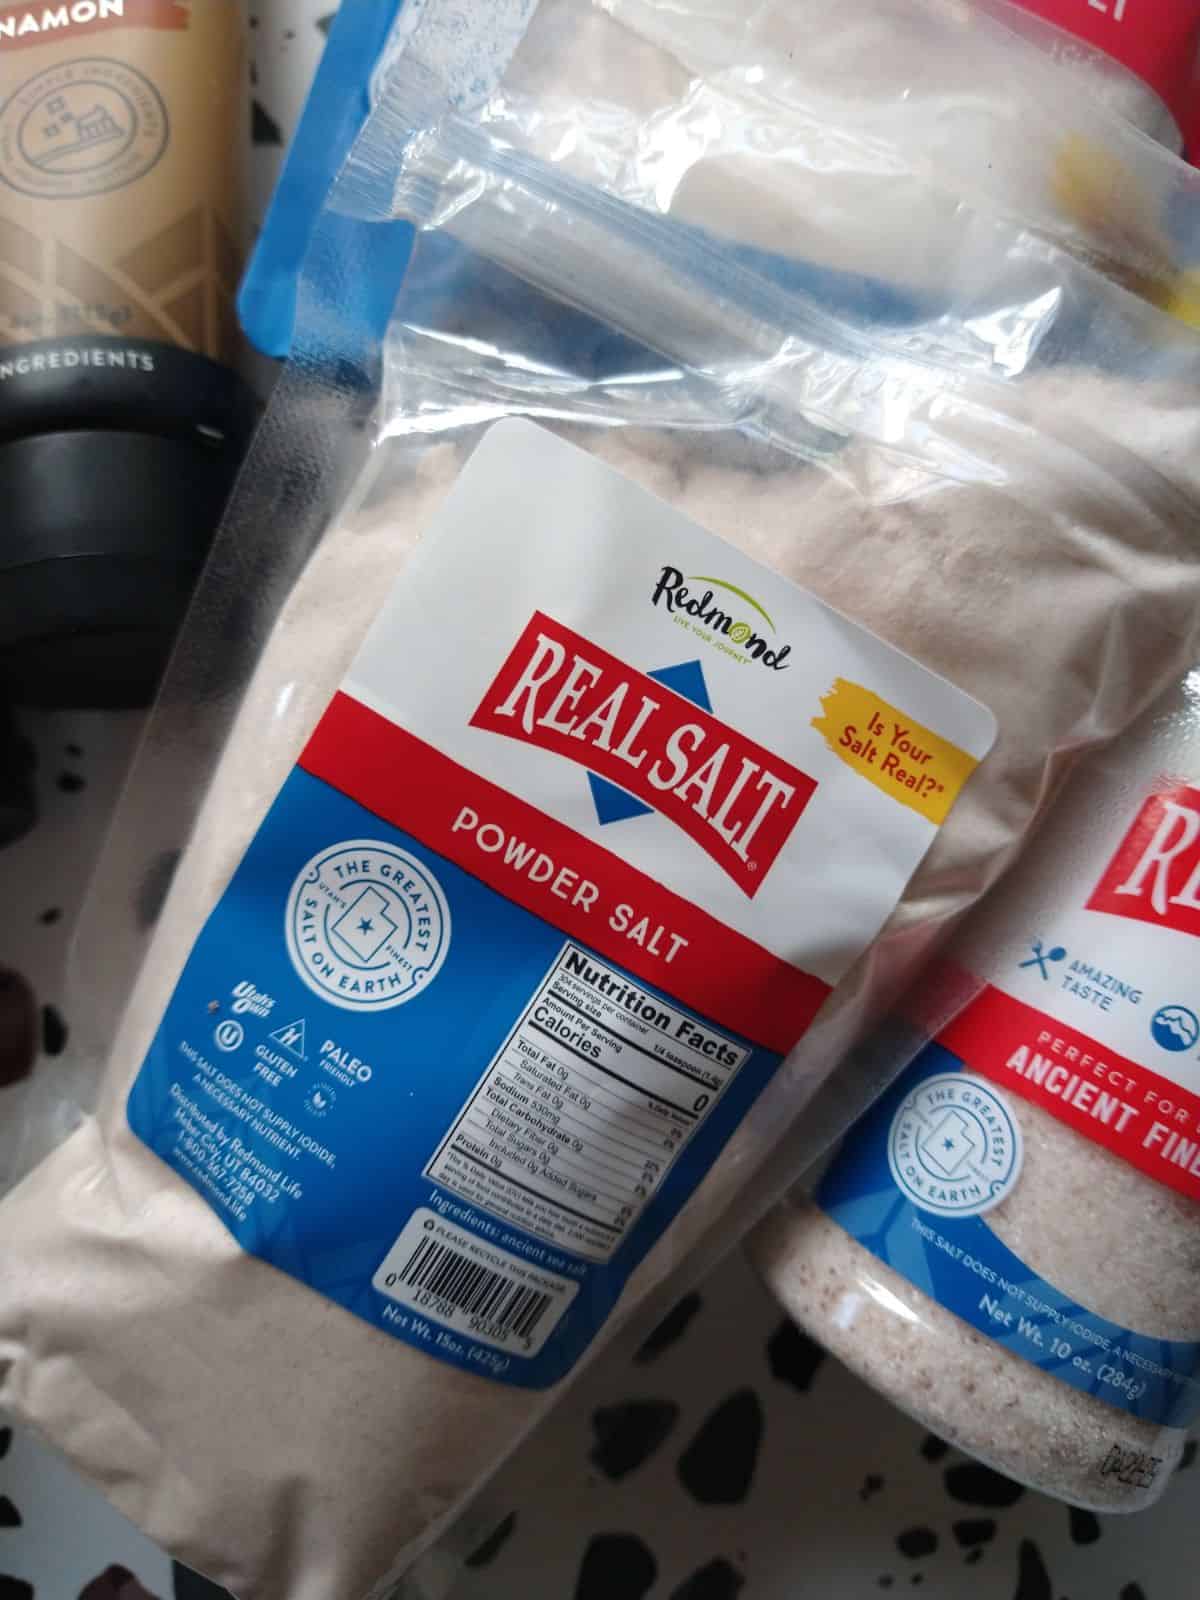 Bags of Redmond Real Salt Powder Salt and a container of fine Sea salt.